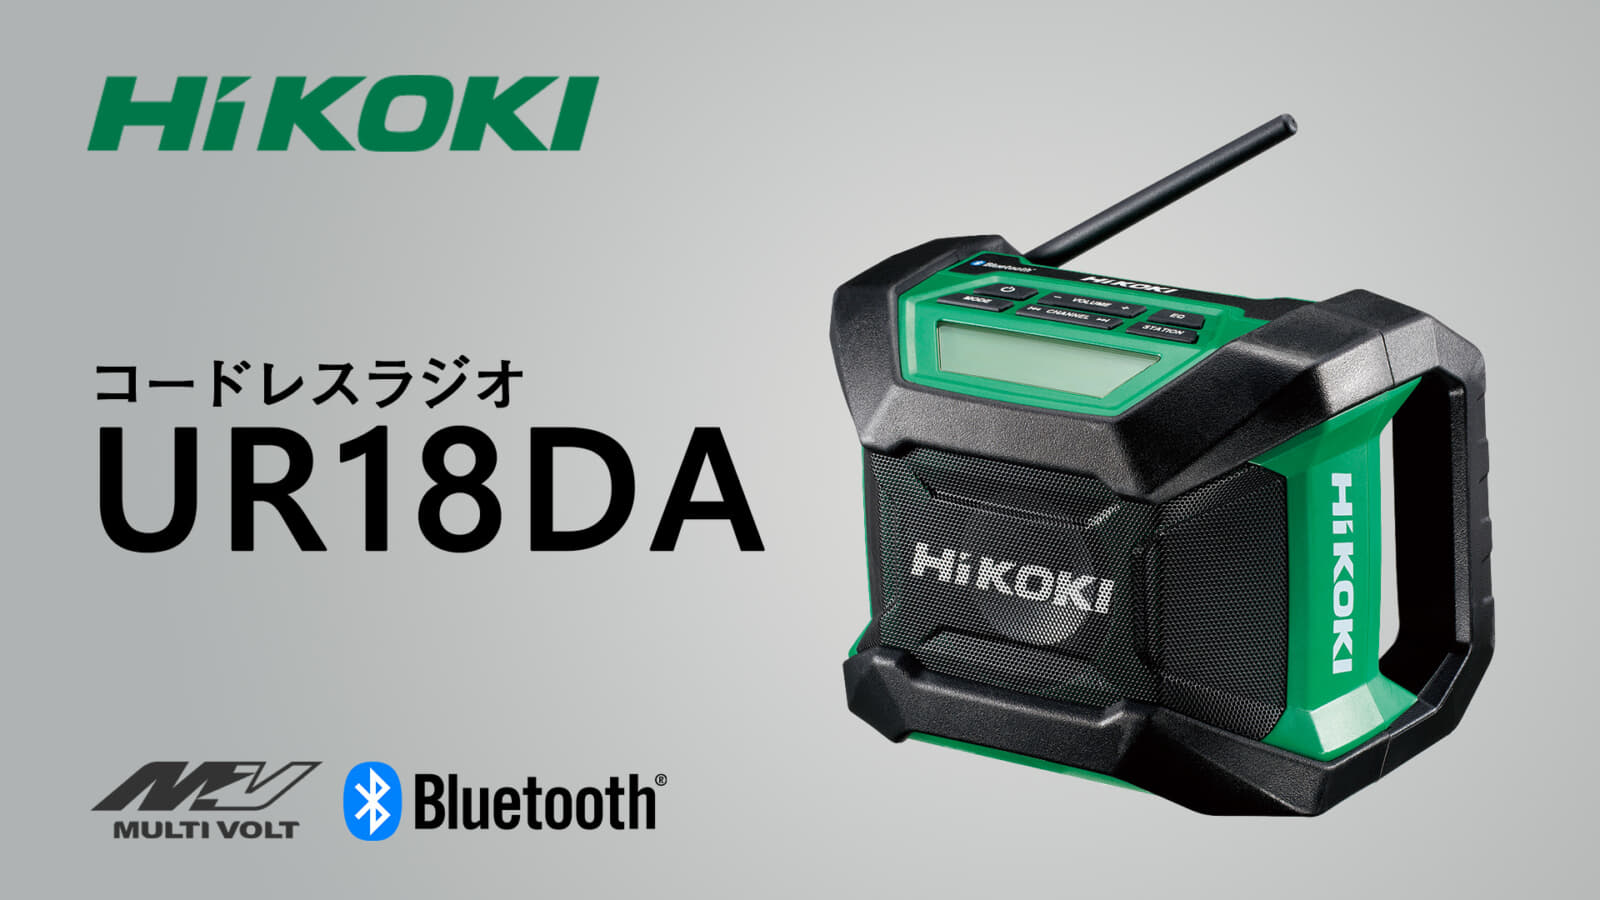 HiKOKI UR18DA コードレスラジオを発売、小型･軽量の省スペースシンプルラジオ